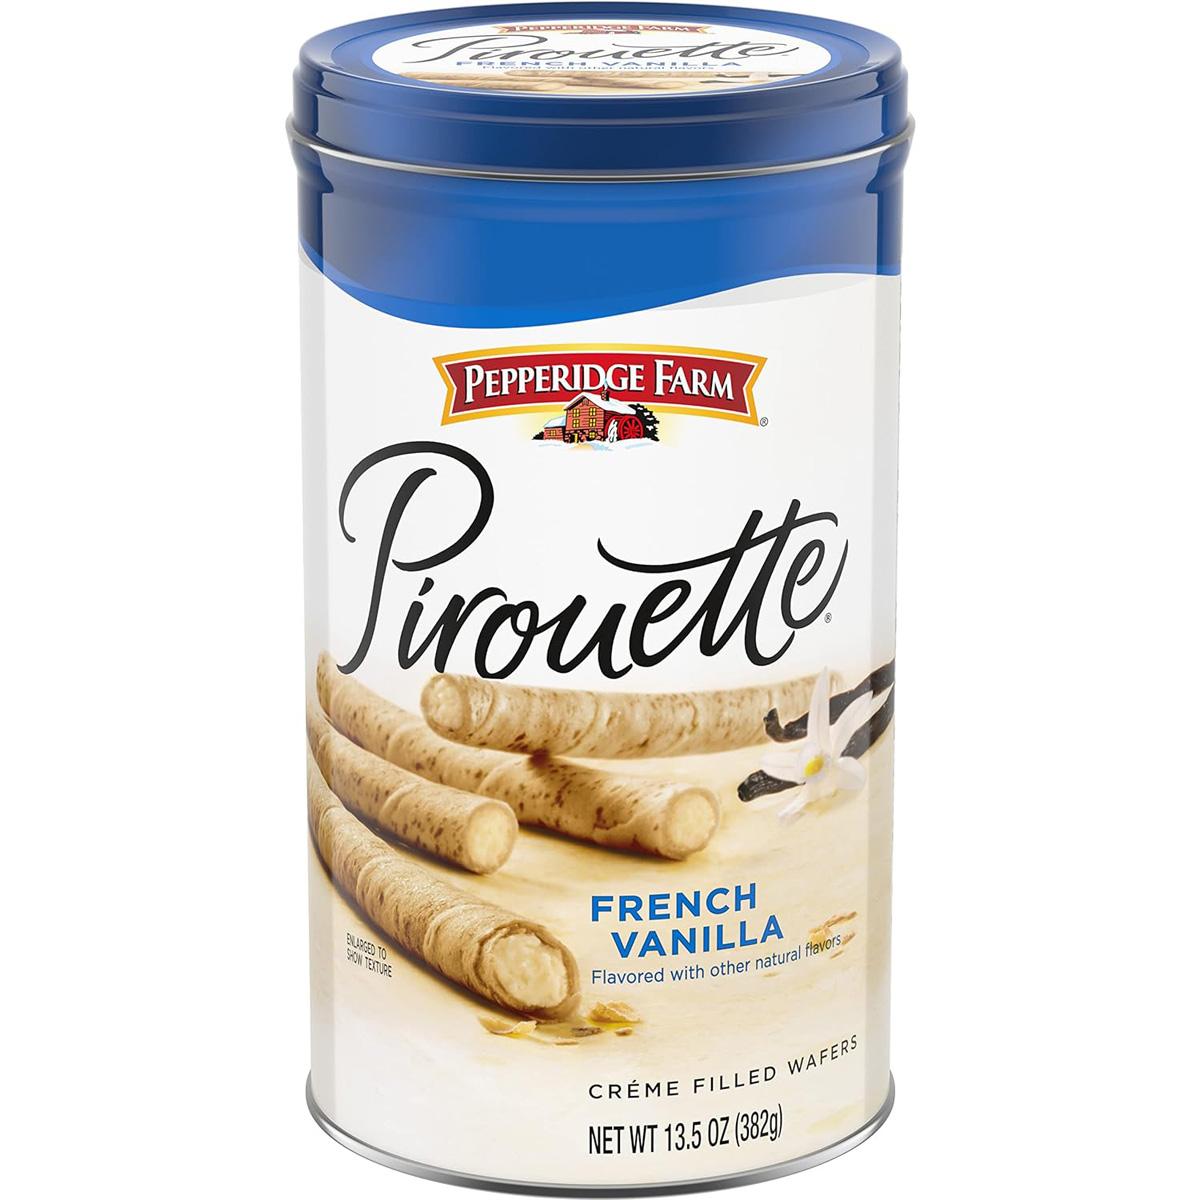 Pepperidge Farm Pirouette Cookies for $4.74 Shipped